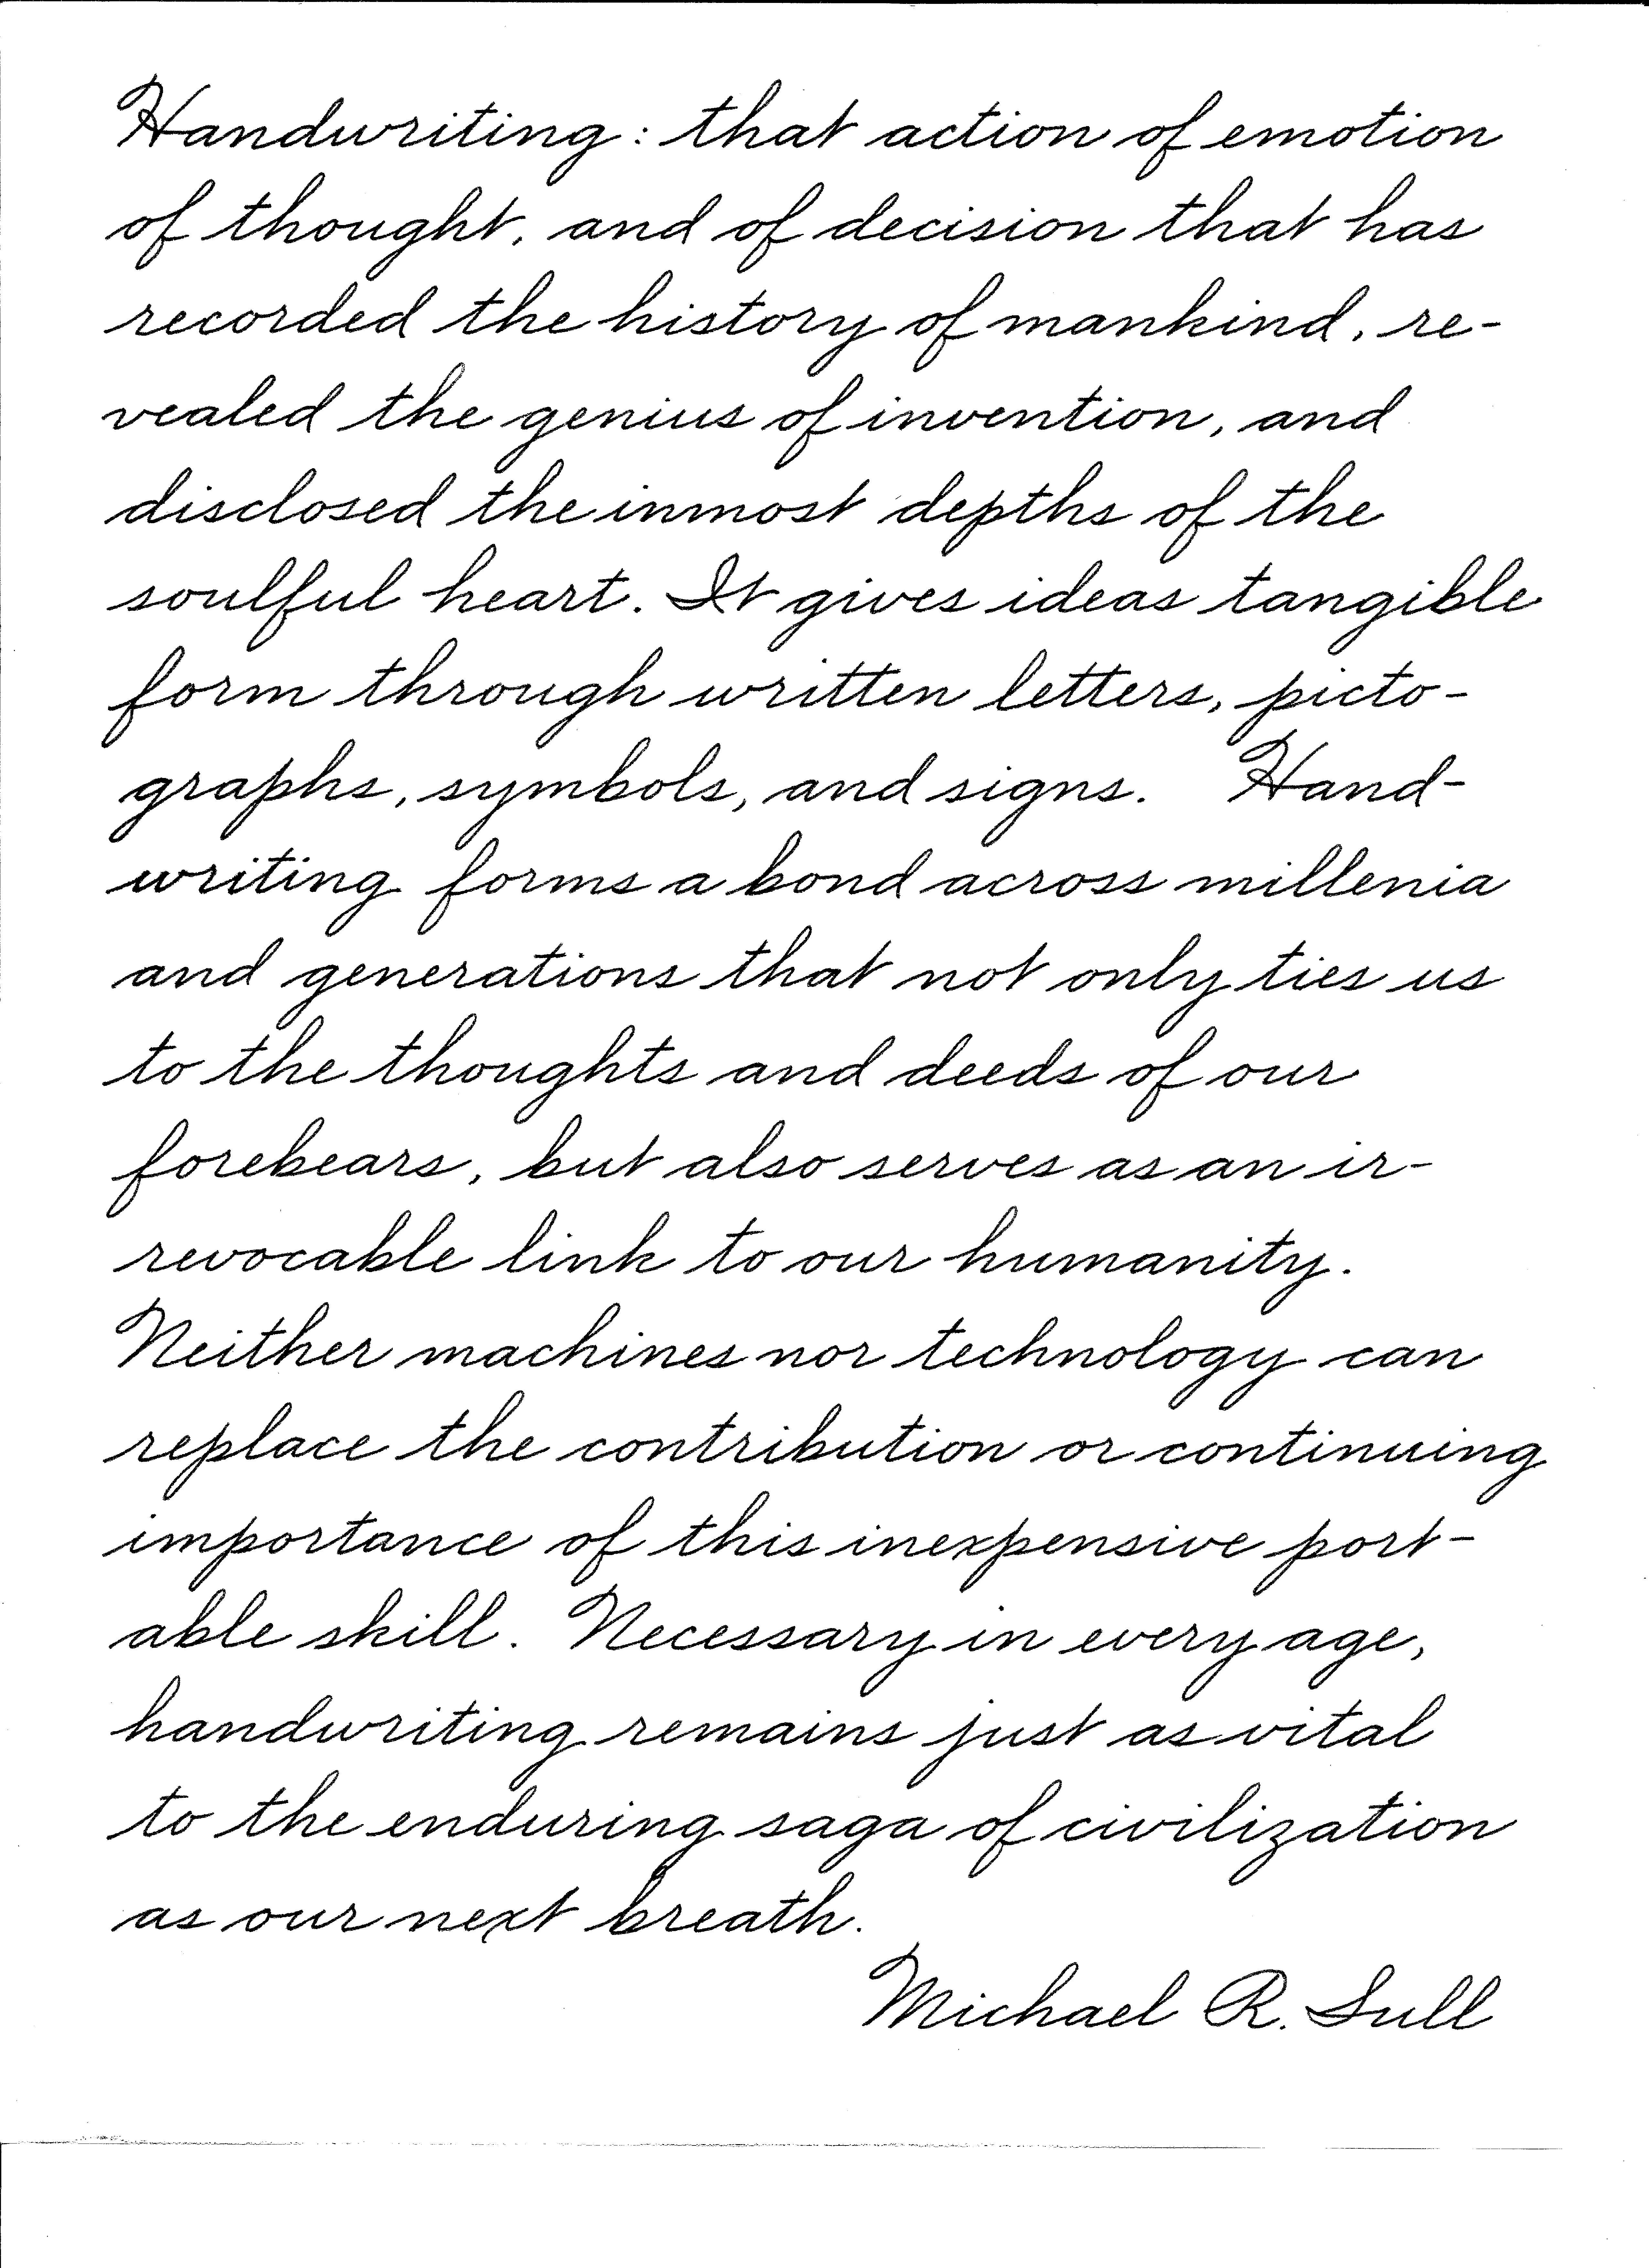 Письмо каллиграфическим почерком